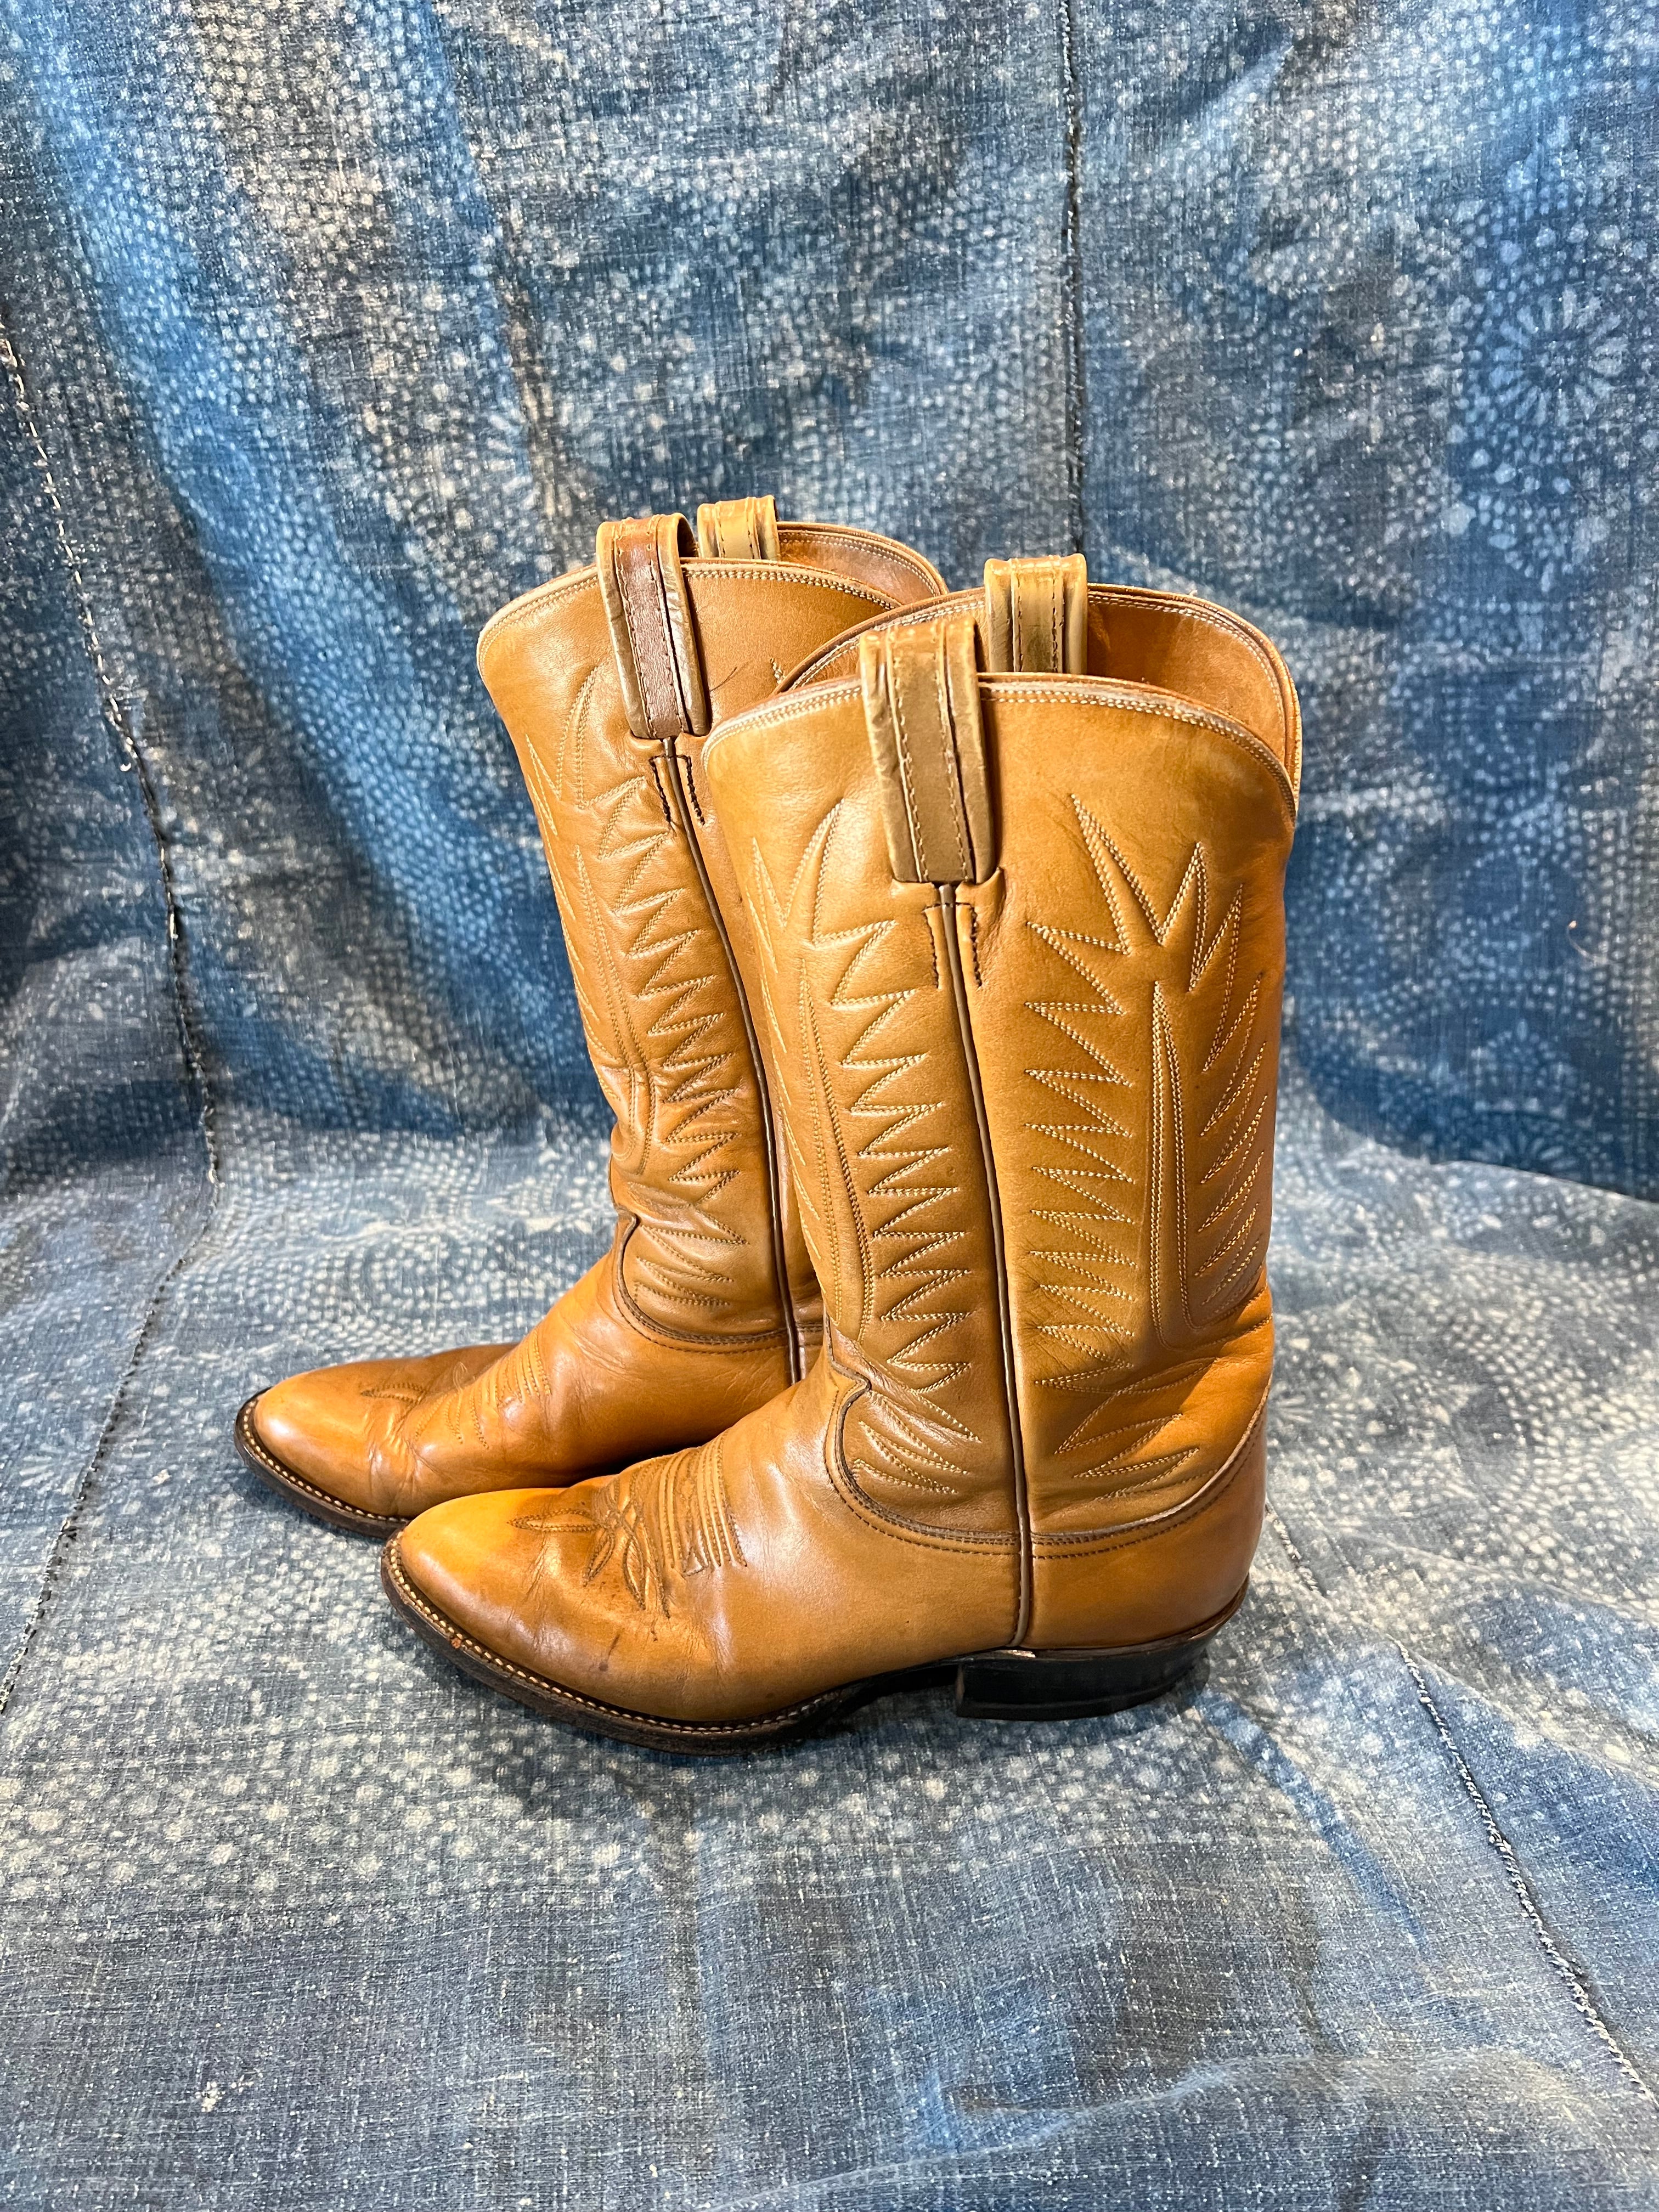 Vintage Women's Tony Lama Cowboy Boots